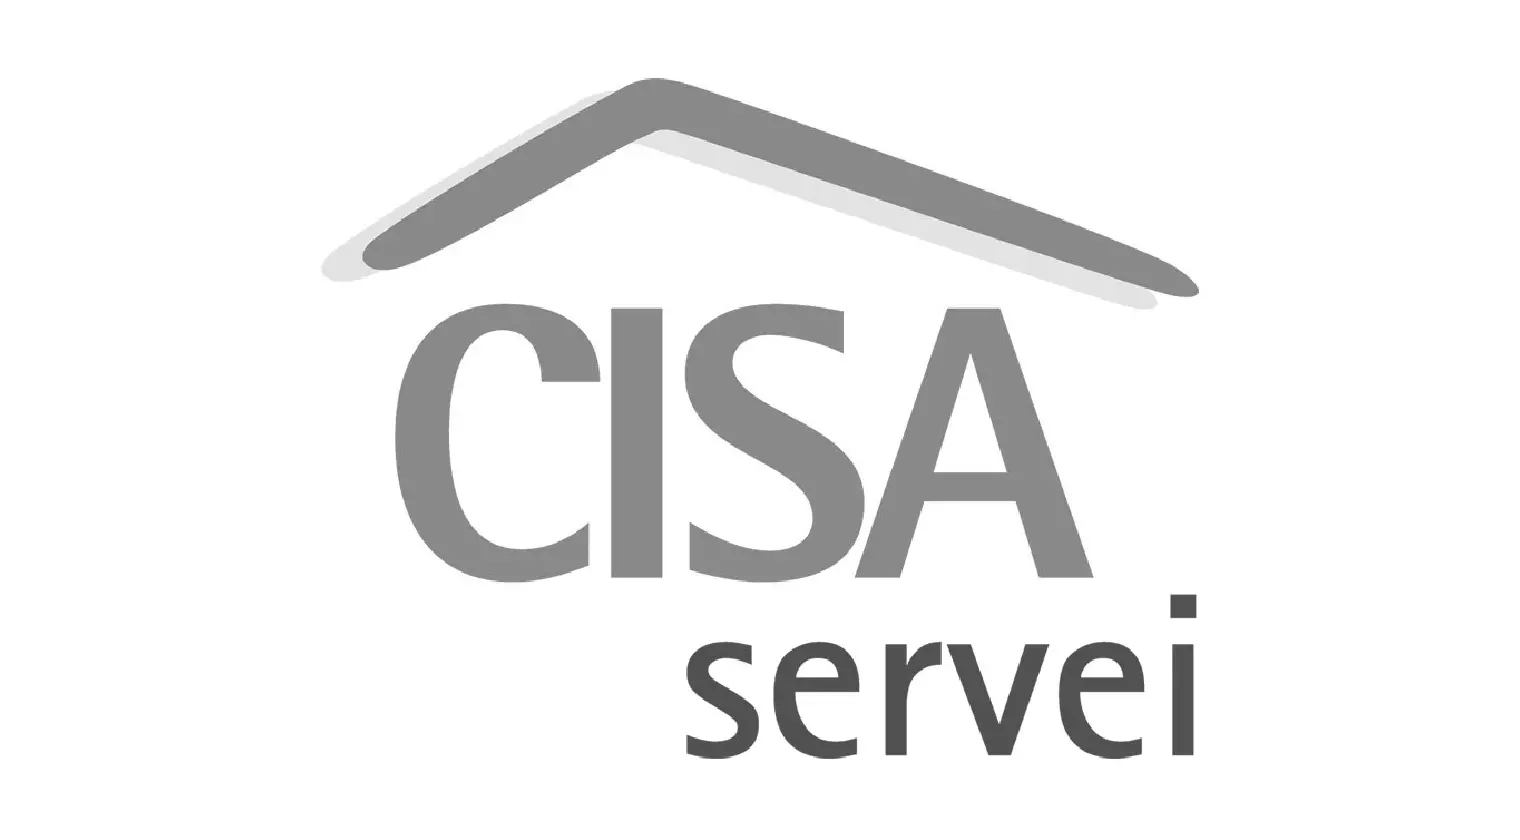 CISA Servei